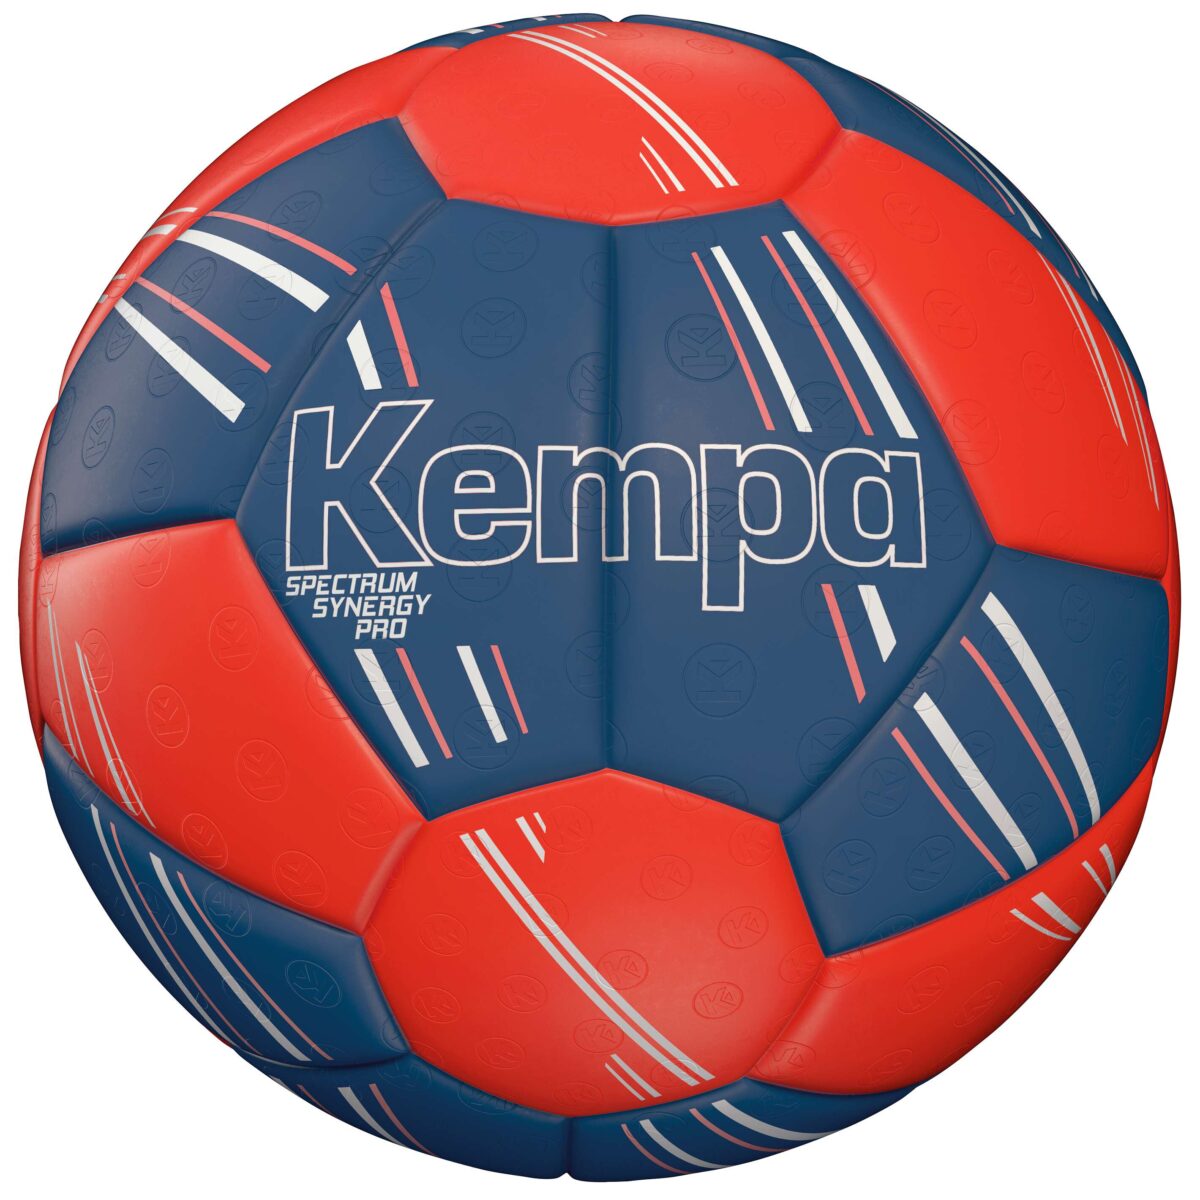 Kempa Handball "Spectrum Synergy Pro 2.0"